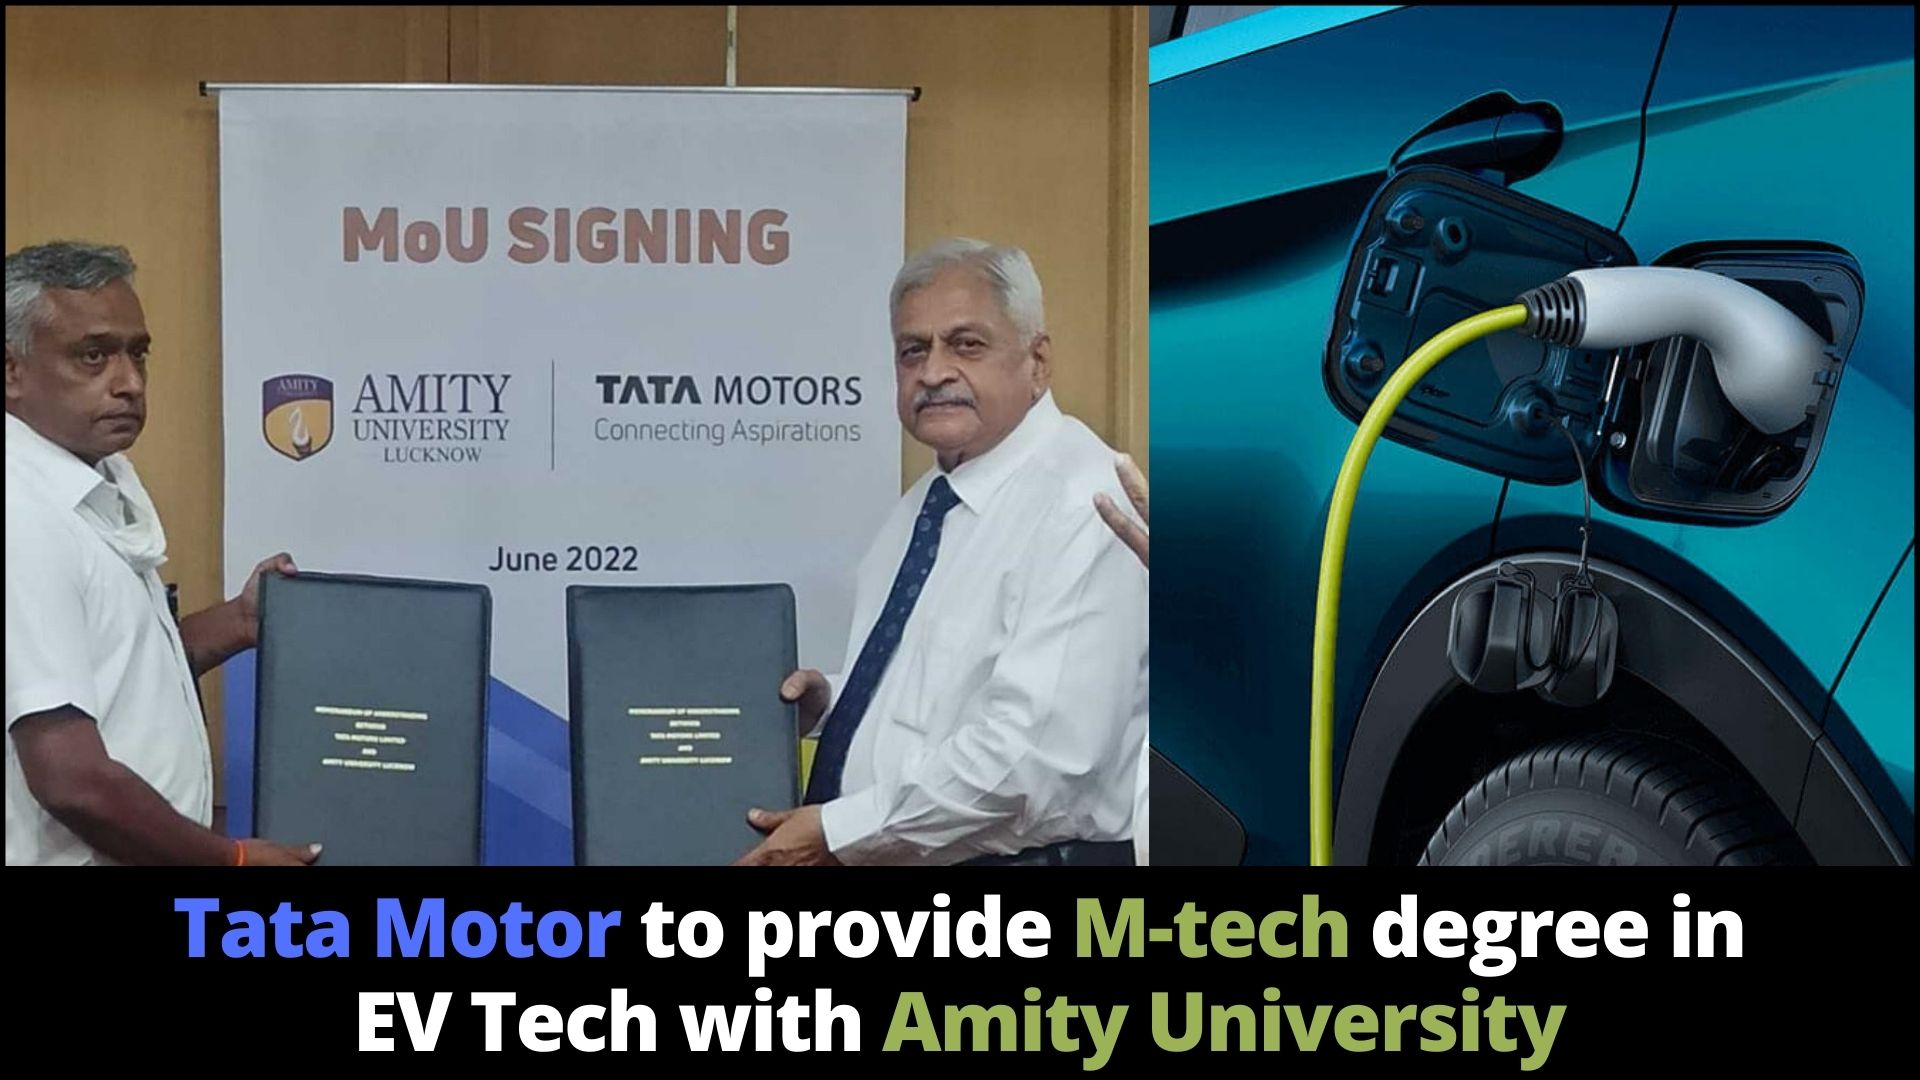 https://e-vehicleinfo.com/tata-motor-to-provide-m-tech-degree-in-ev-tech-with-amity-university/